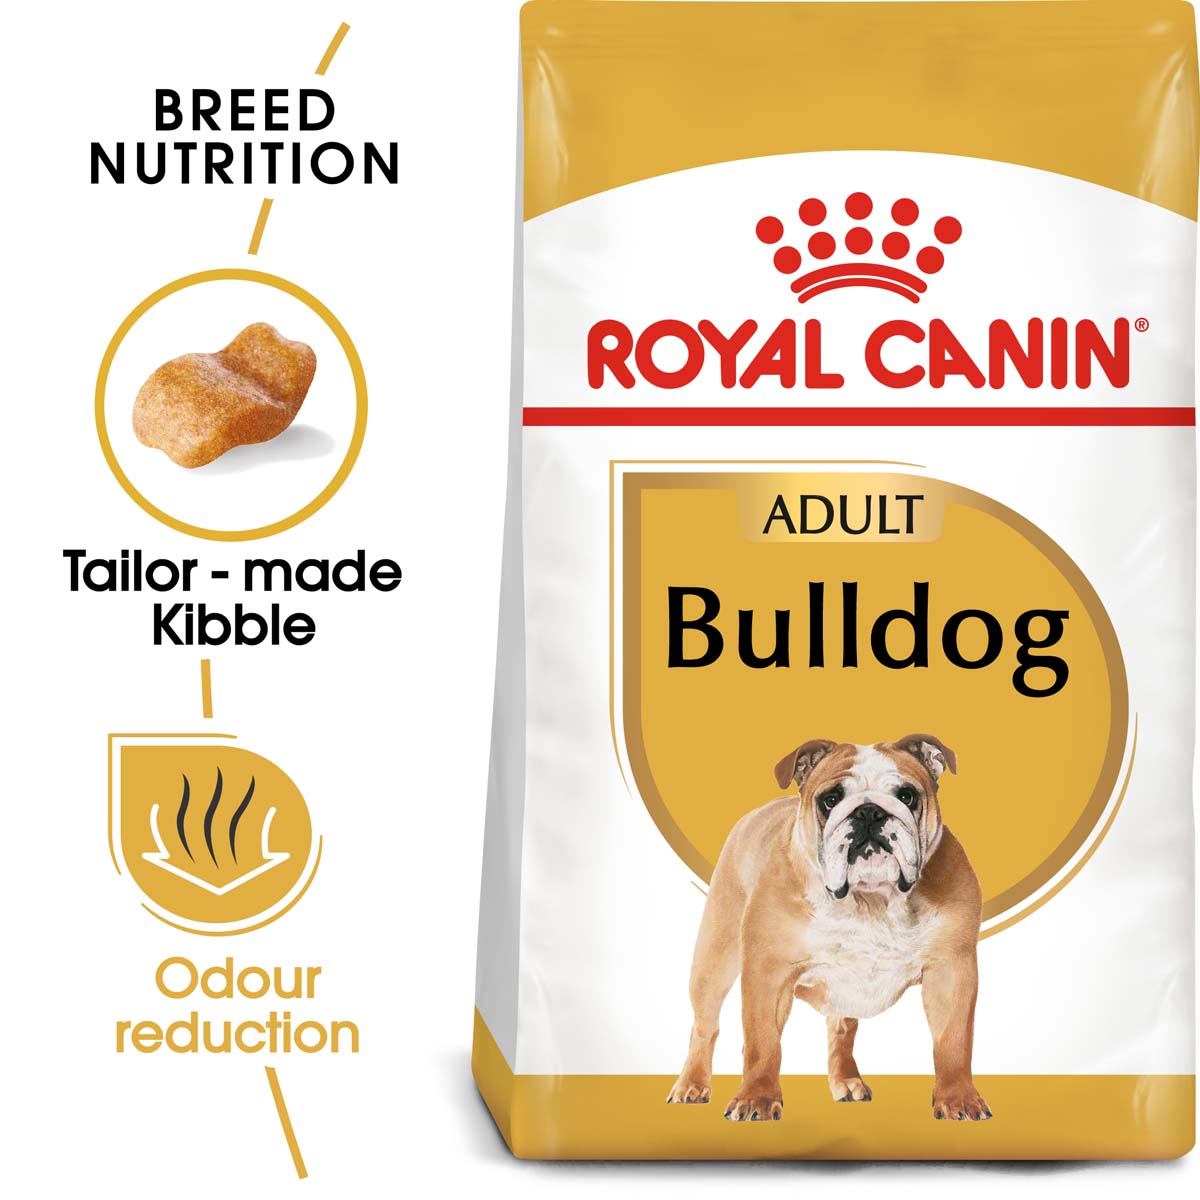 ROYAL CANIN Bulldog Adult Hundefutter trocken 3kg